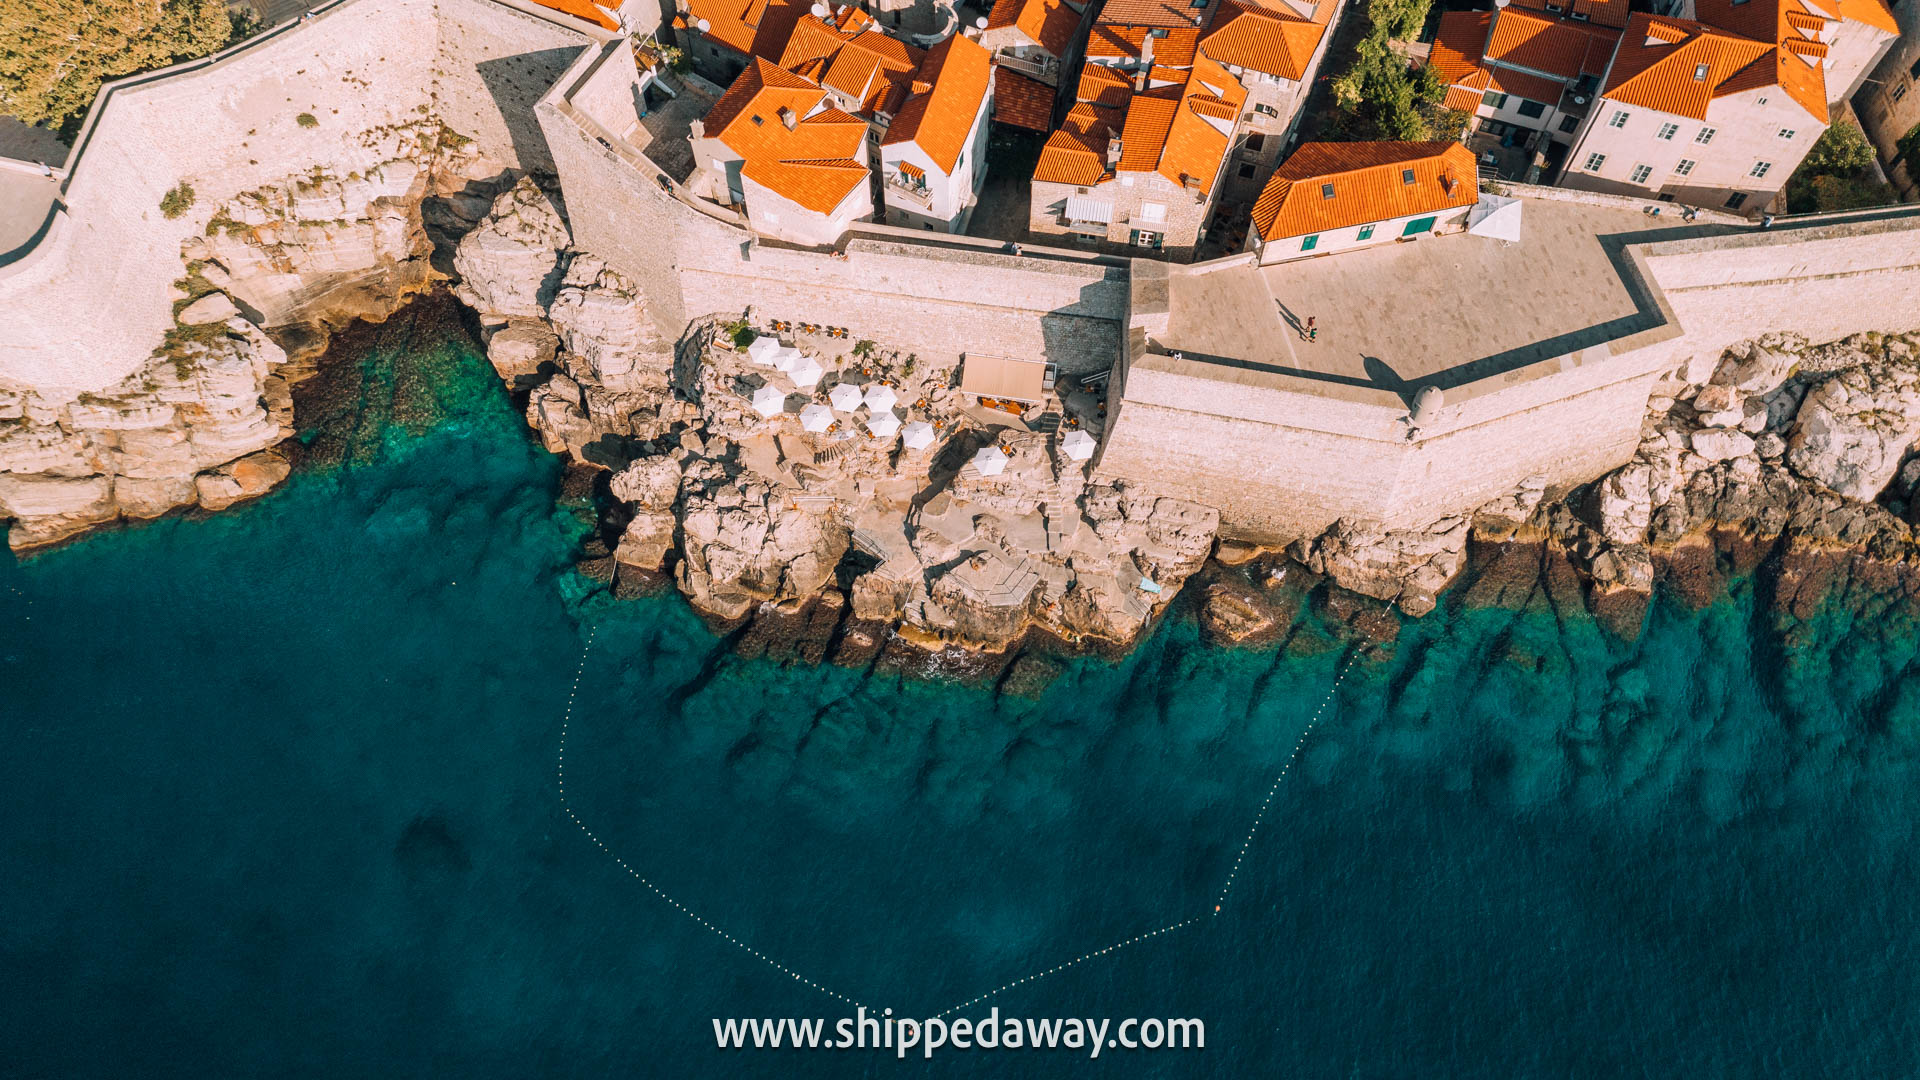 Best Dubrovnik Beaches - Dubrovnik Beaches - Best Beaches in Dubrovnik - Dubrovnik Beaches Guide - Best Beaches in Dubrovnik as recommended by a local - Buza Beach - Buza Bar Dubrovnik